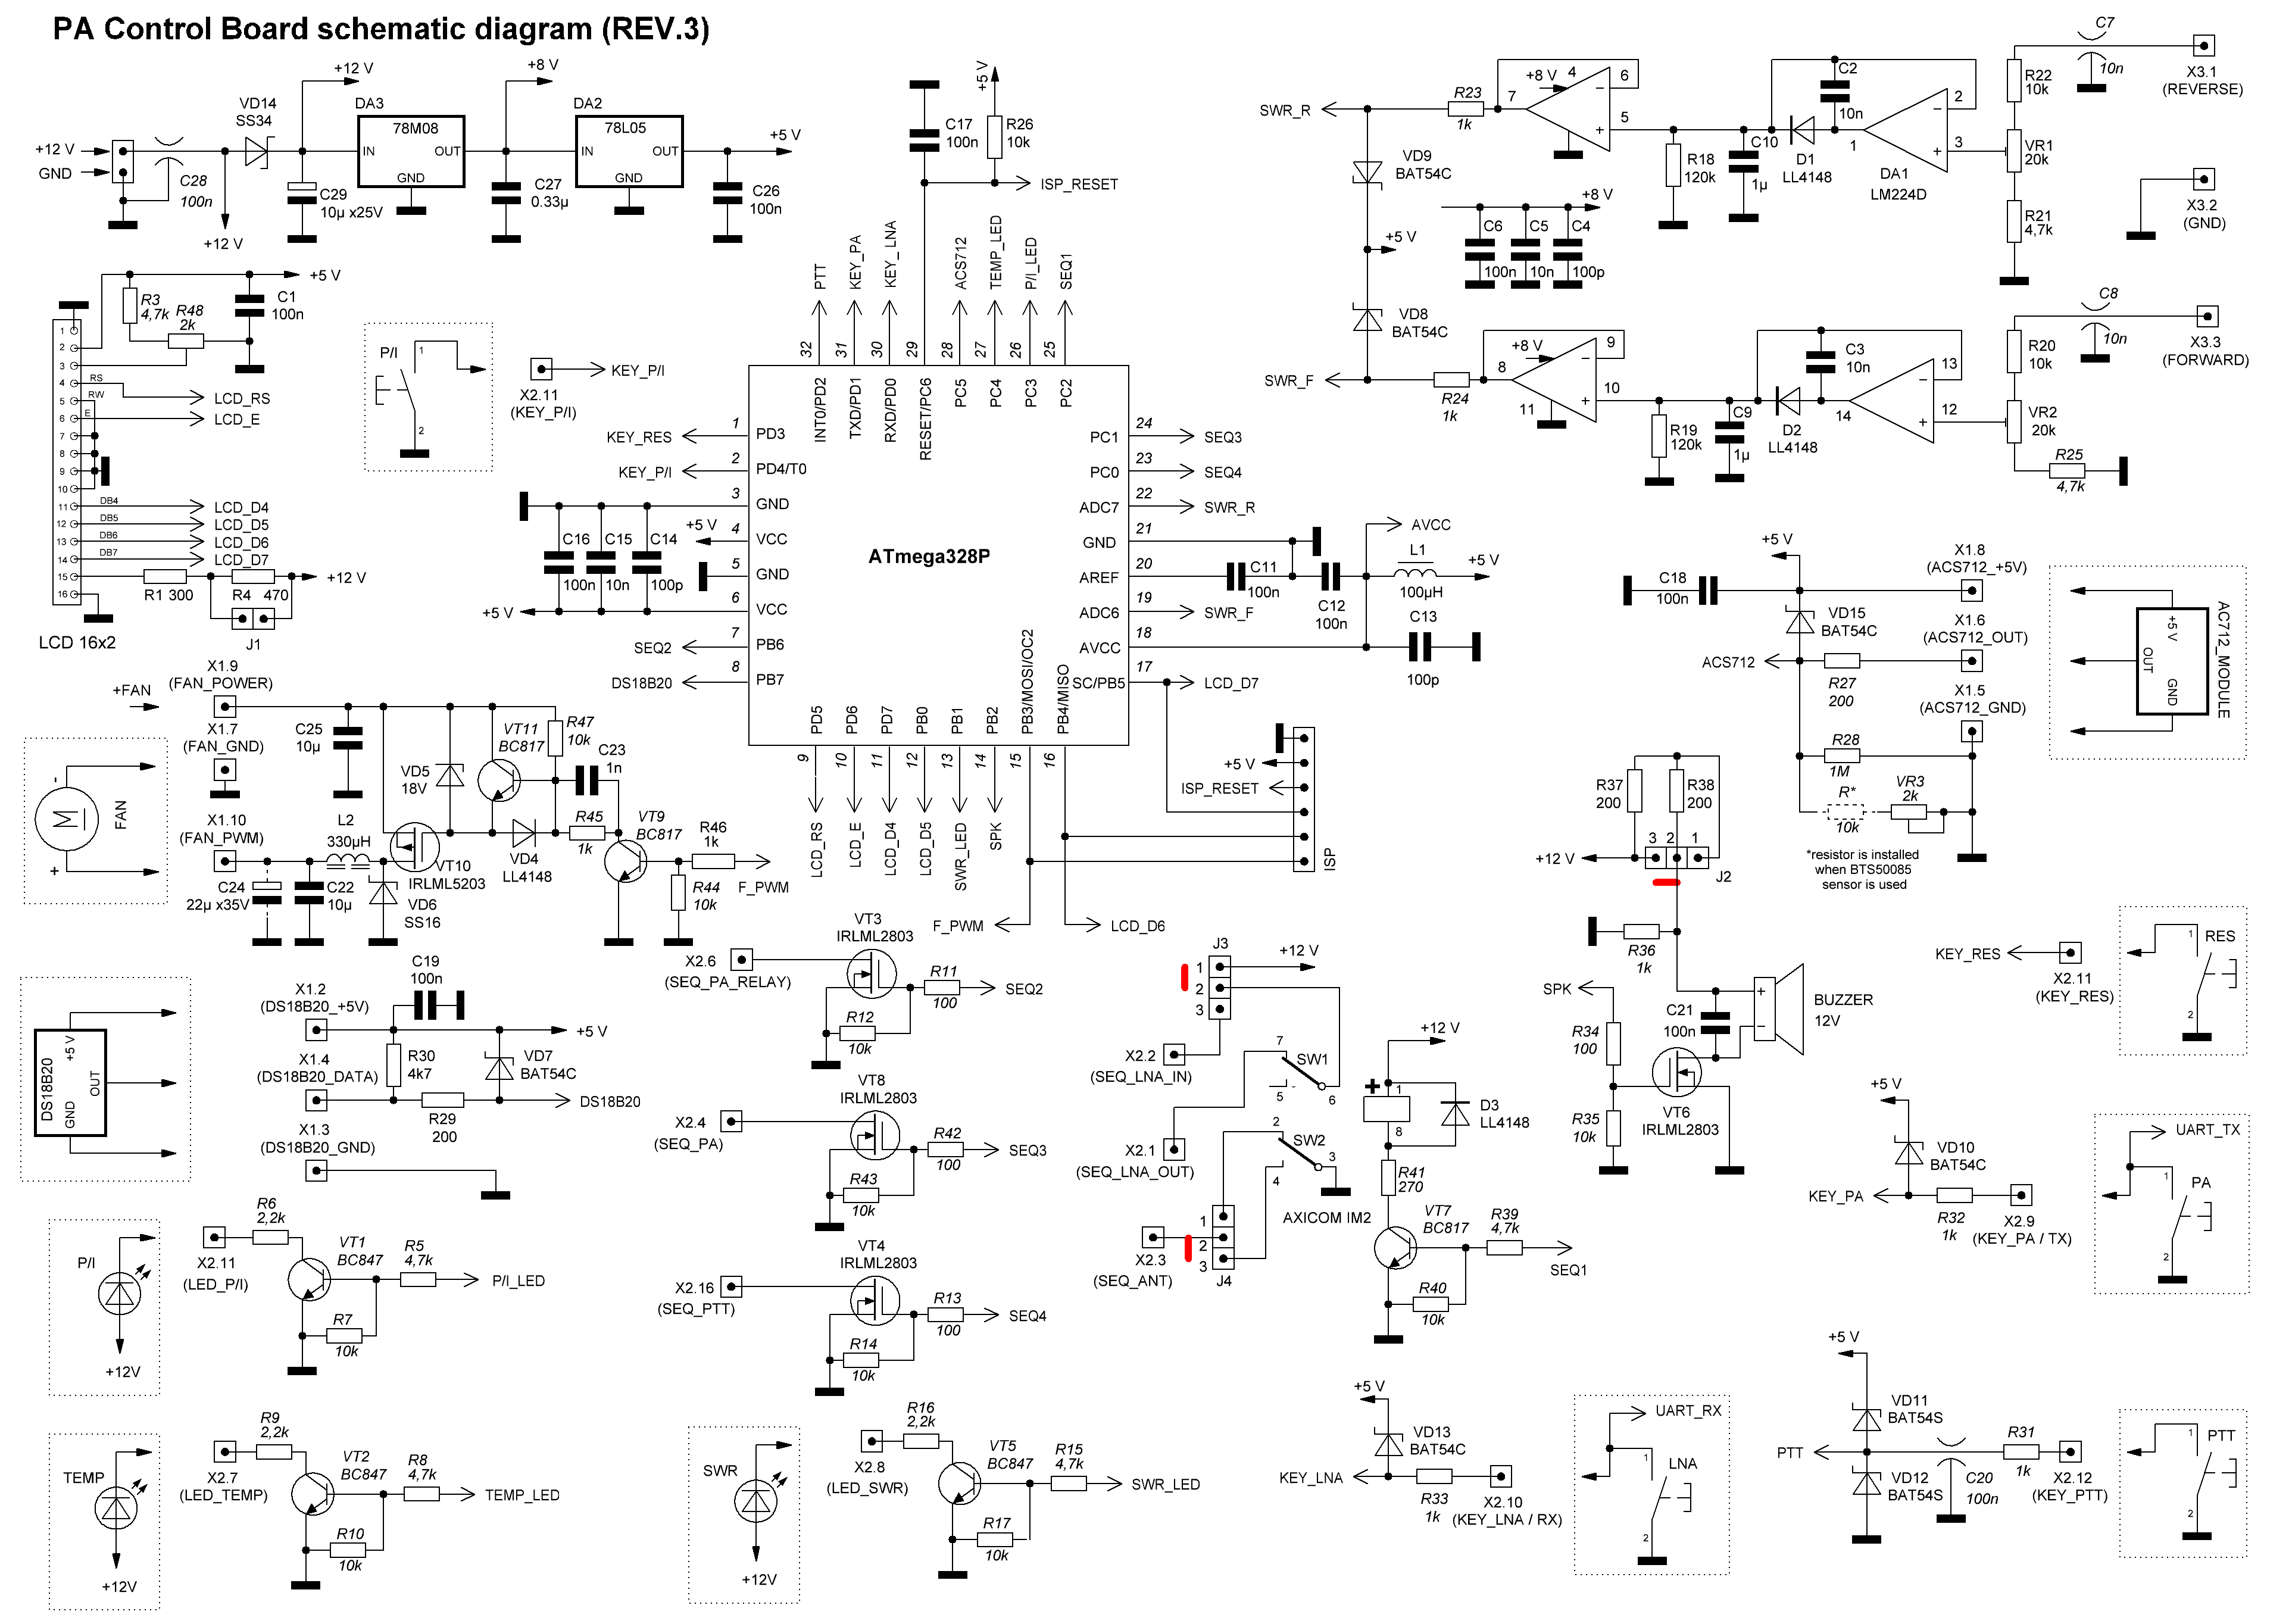 PA controller REV3 schematics (update from 2019-12-27)